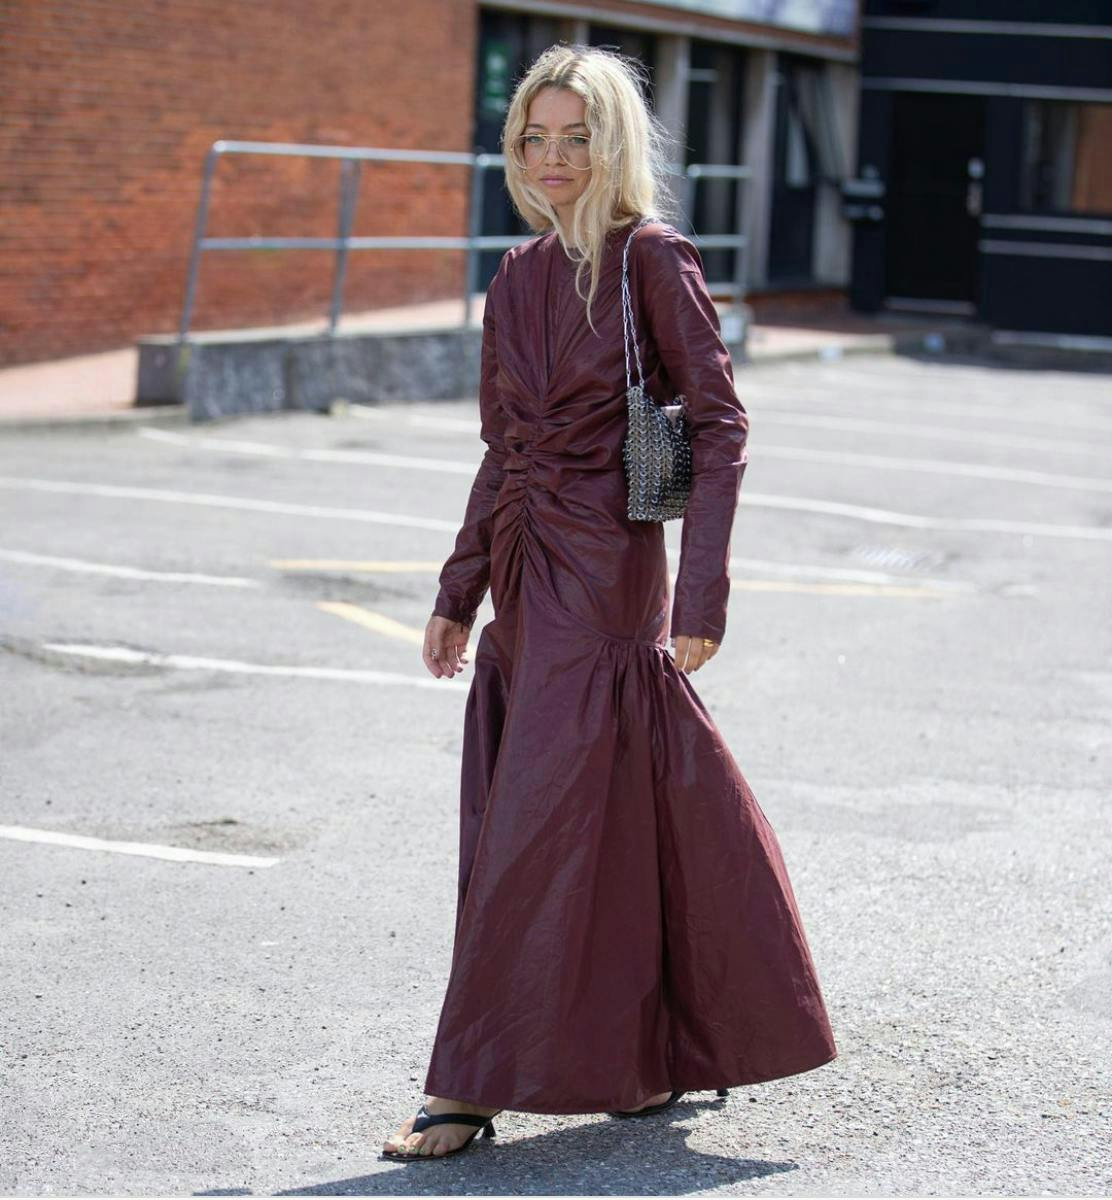 clothing apparel dress sleeve overcoat coat female person human